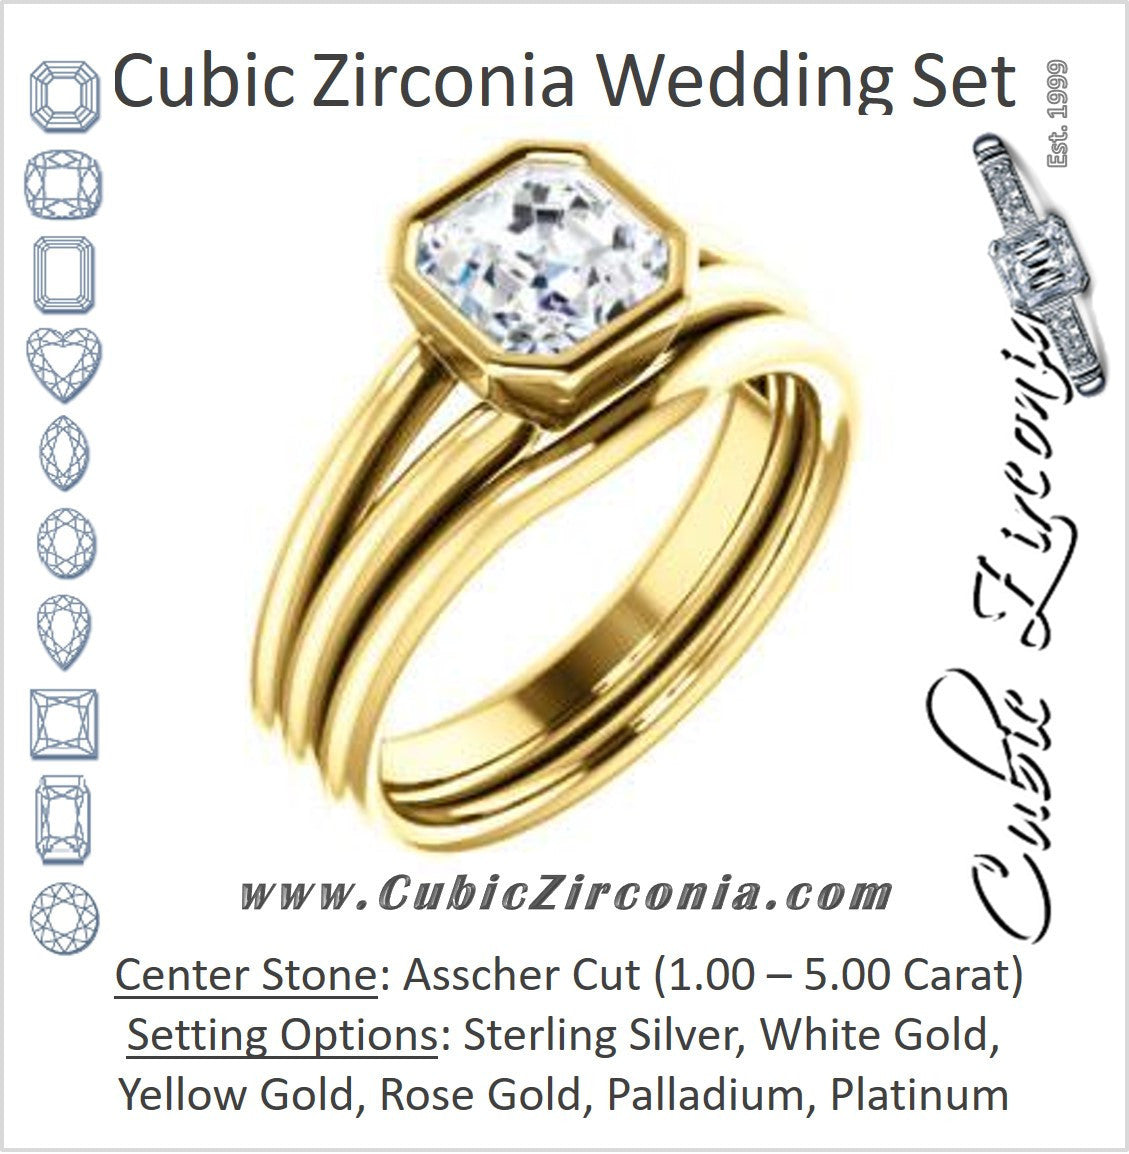 CZ Wedding Set, featuring The Shae engagement ring (Customizable Asscher Cut Split-Band Solitaire)